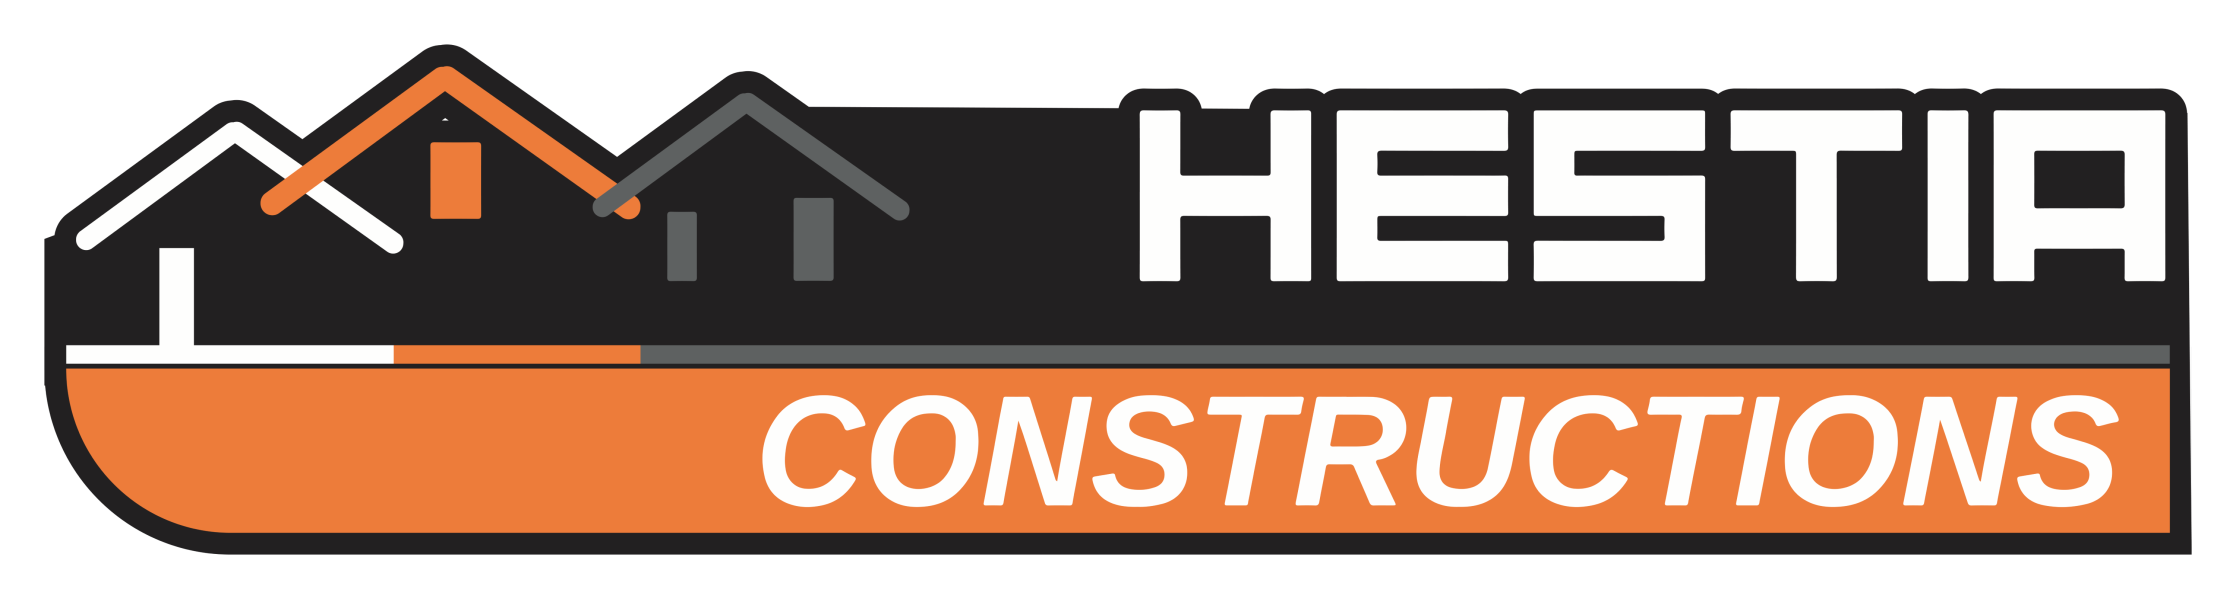 HESTIA CONSTRUCTIONS - Nos Engagements